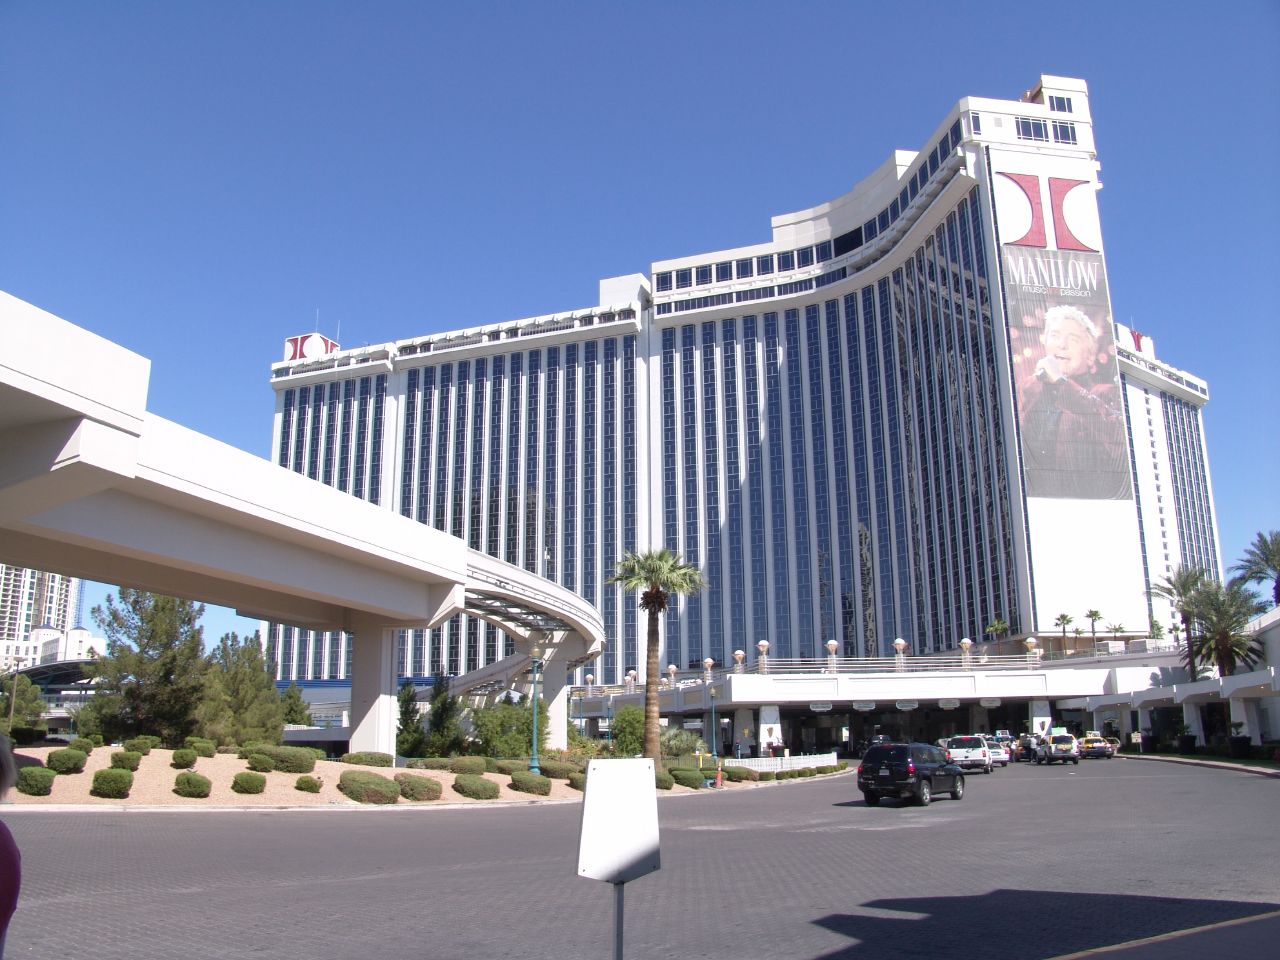 Westgate Las Vegas Resort and Casino yelp